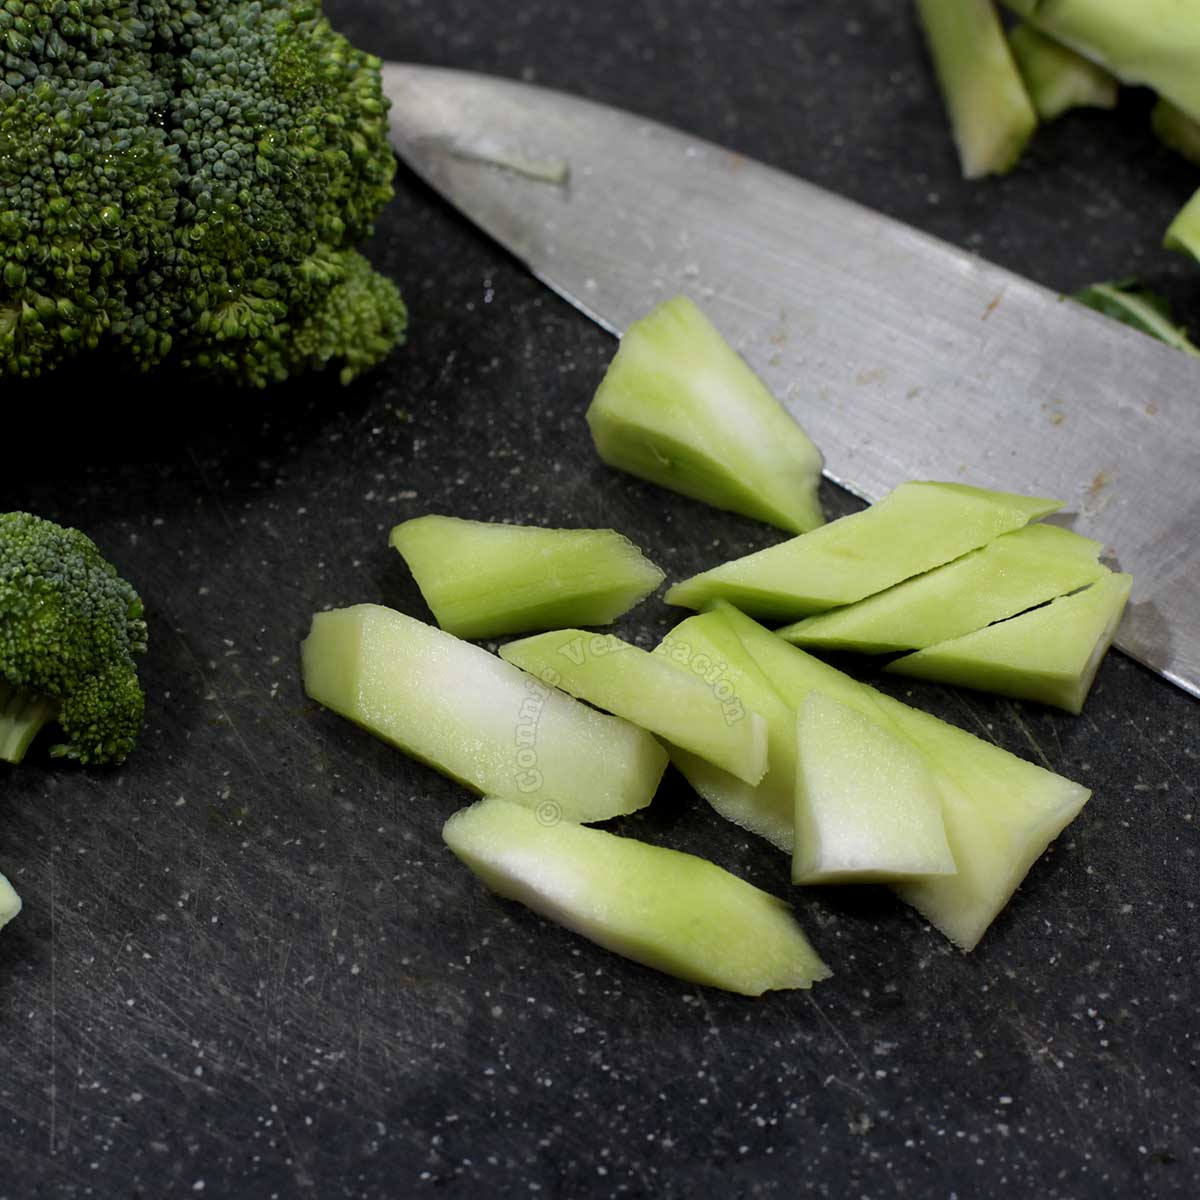 Diced broccoli stem